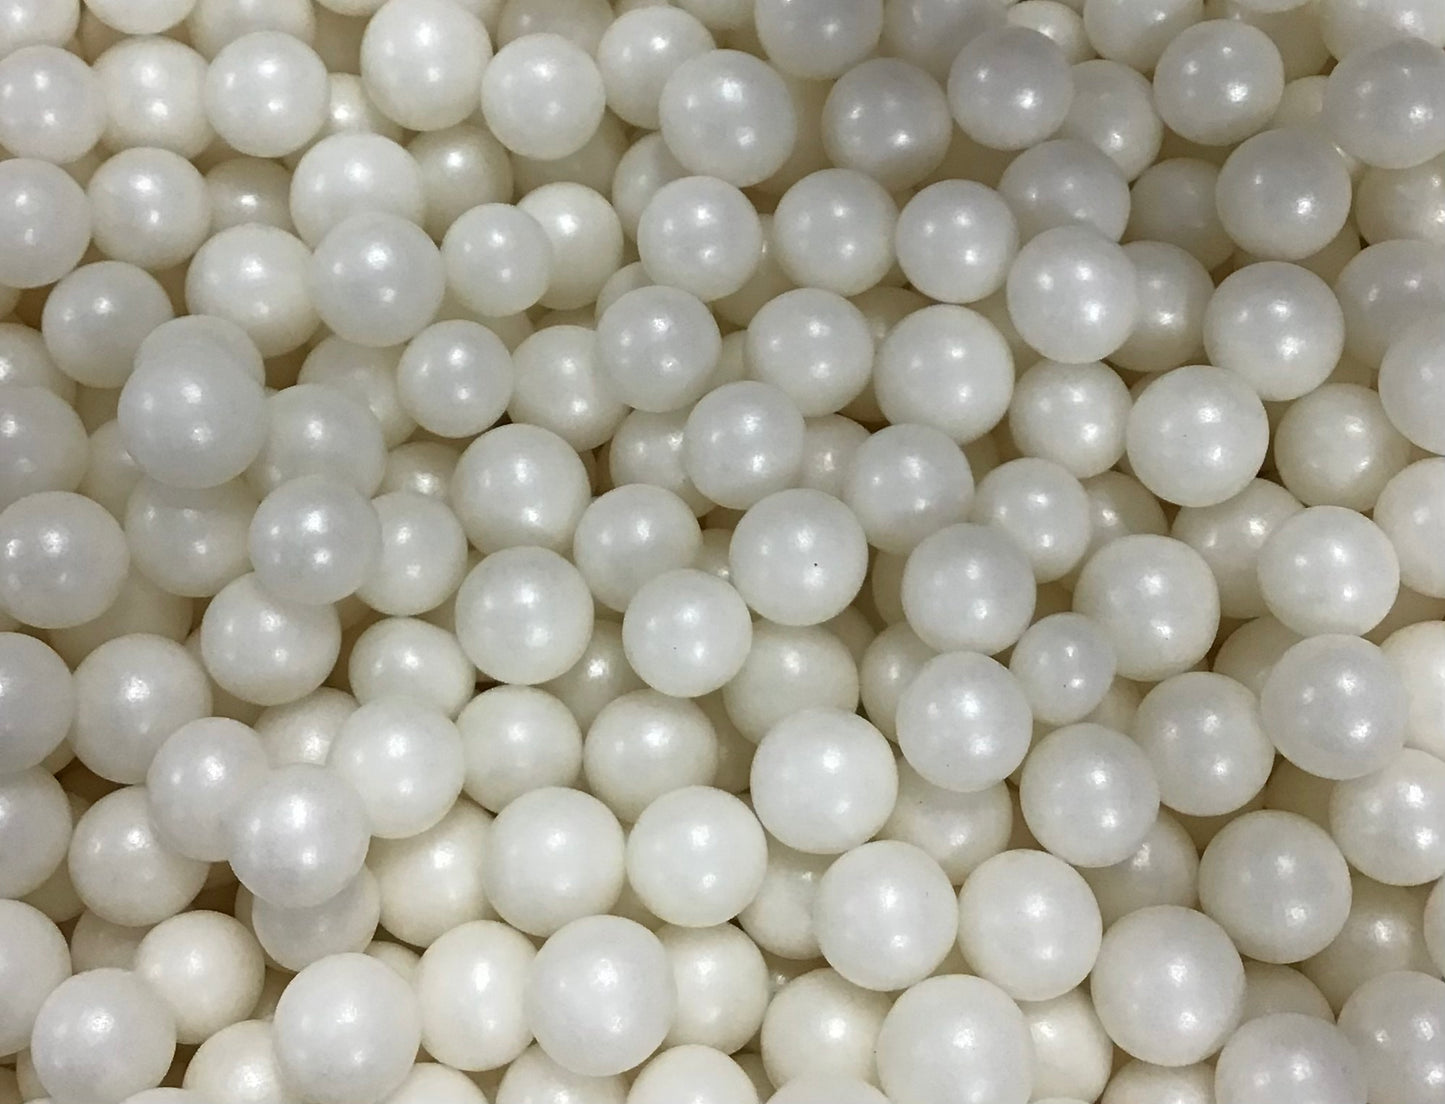 Sugar Pearls